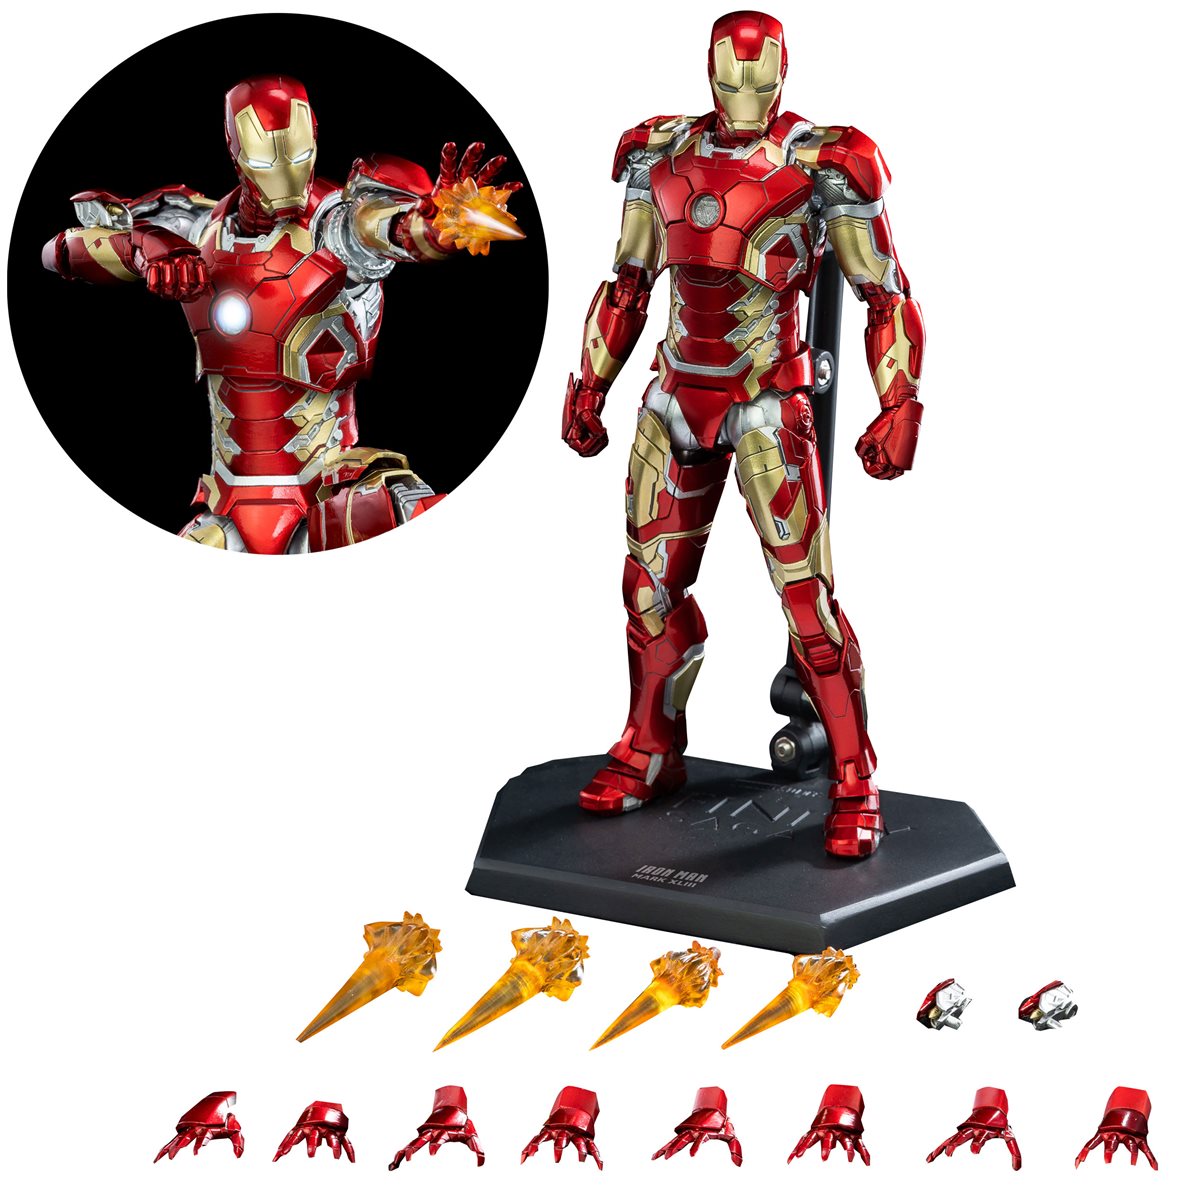 Avengers Infinity Saga Iron Man Mark 20 DLX 20202 Scale Action Figure